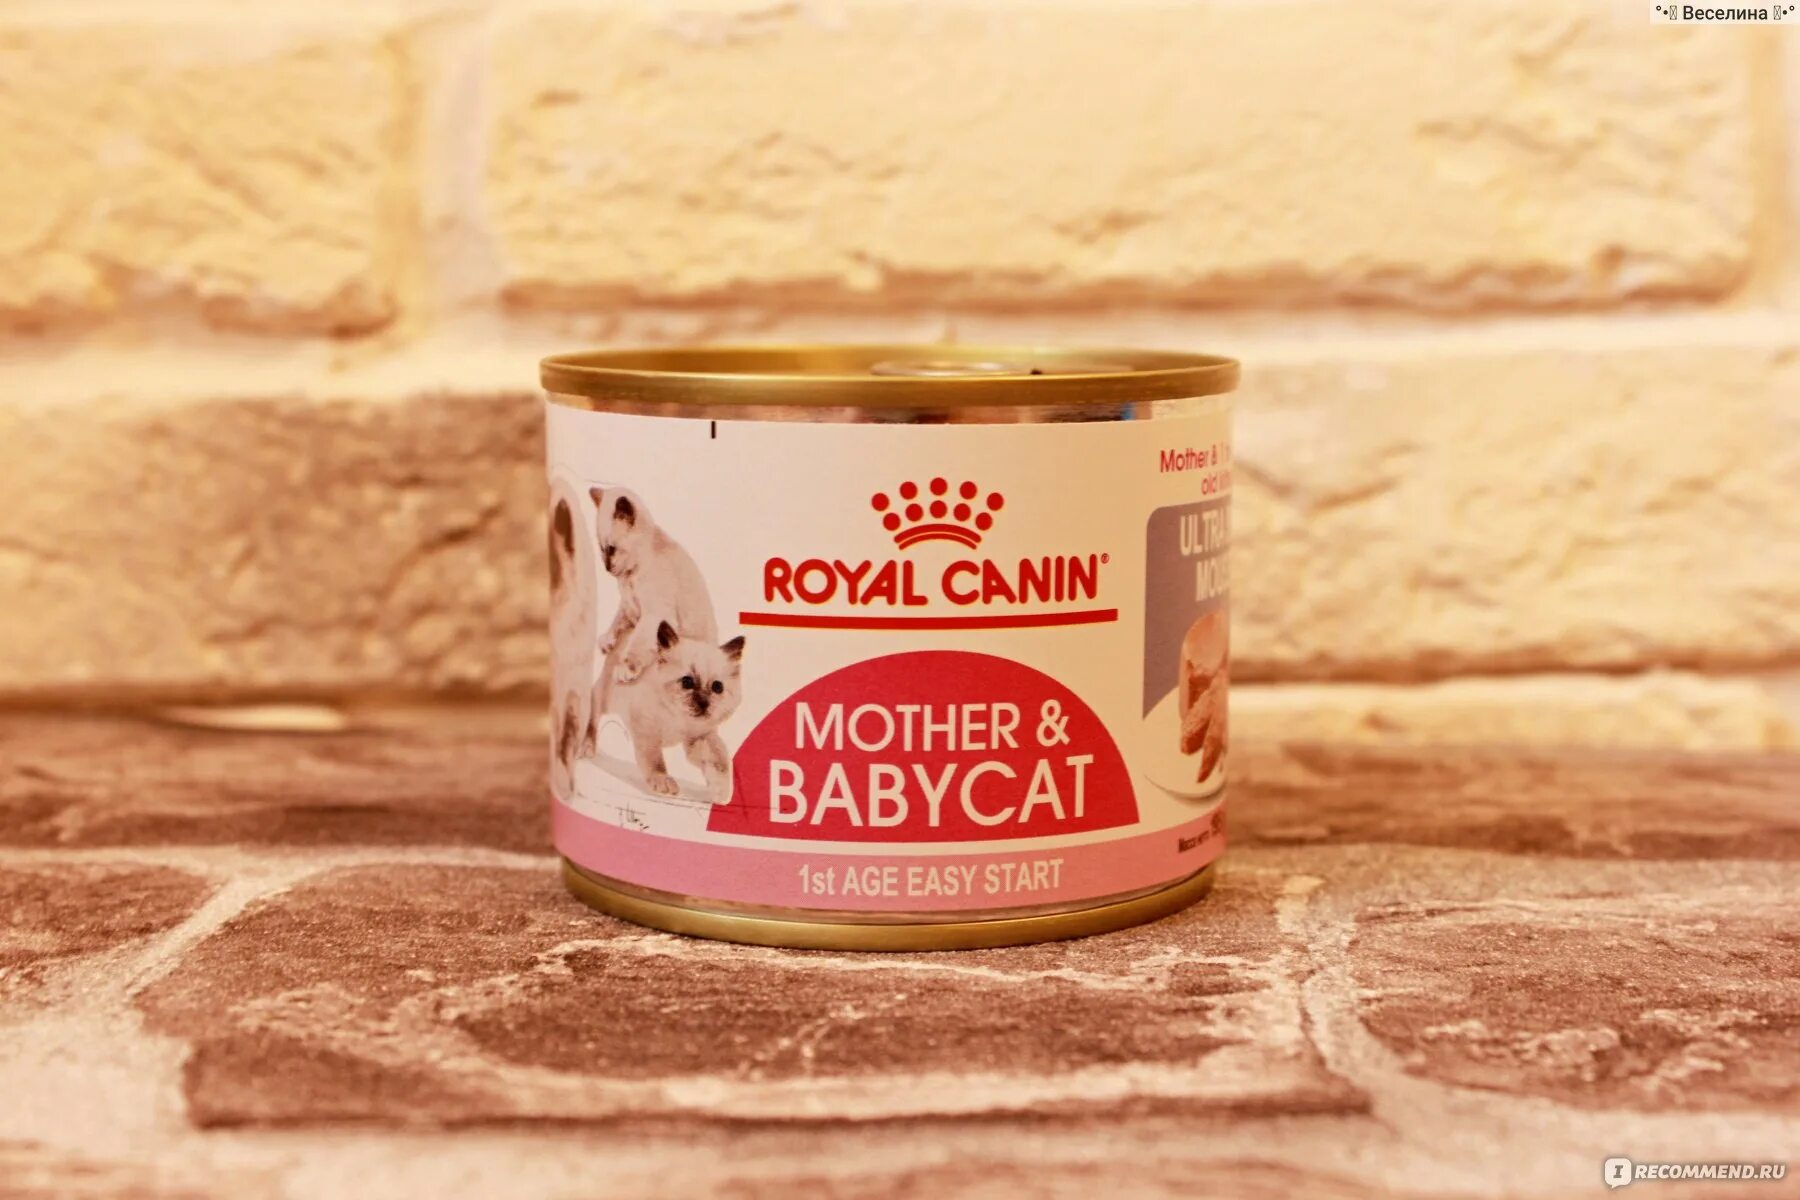 Royal canin babycat. Royal Canin Babycat Mousse. Роял Канин железная банка. Мусс mother Babycat реклама. Мусс mother & Babycat баннер.